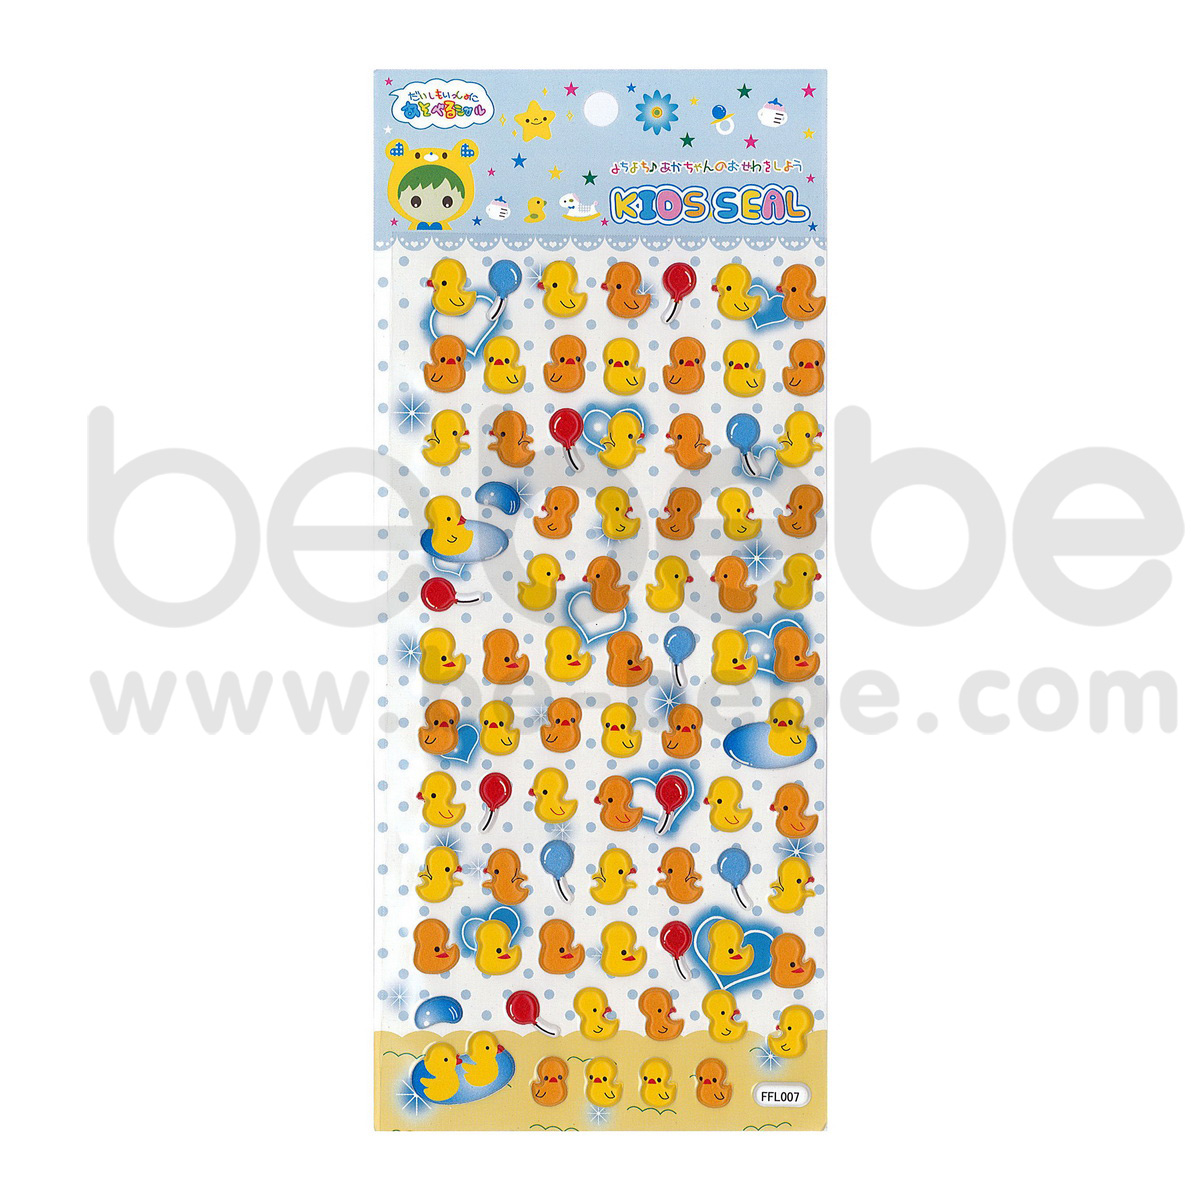 be bebe : Puffy Sticker (8.5x17cm.) / FFL-007